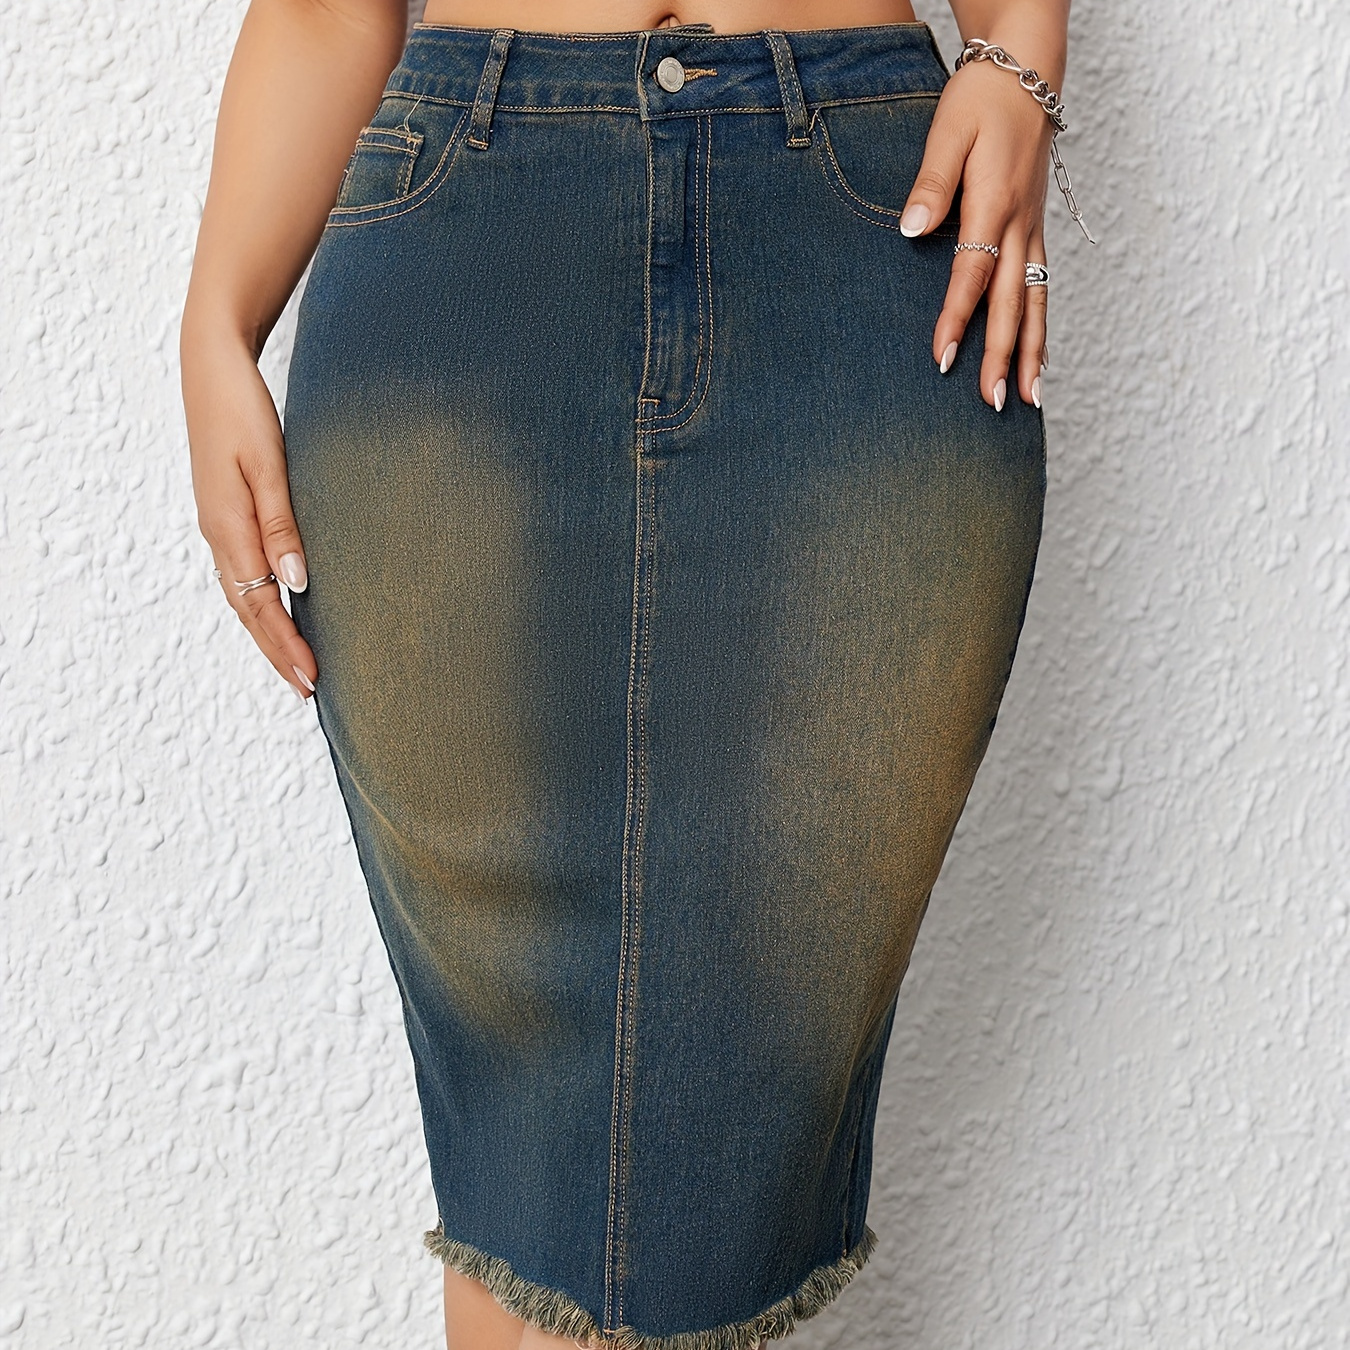 

Women's Sexy Vintage Washed Denim Skirt, High-waist Bodycon Midi Pencil Skirt With Frayed Hem, Casual Fashion Jean Skirt